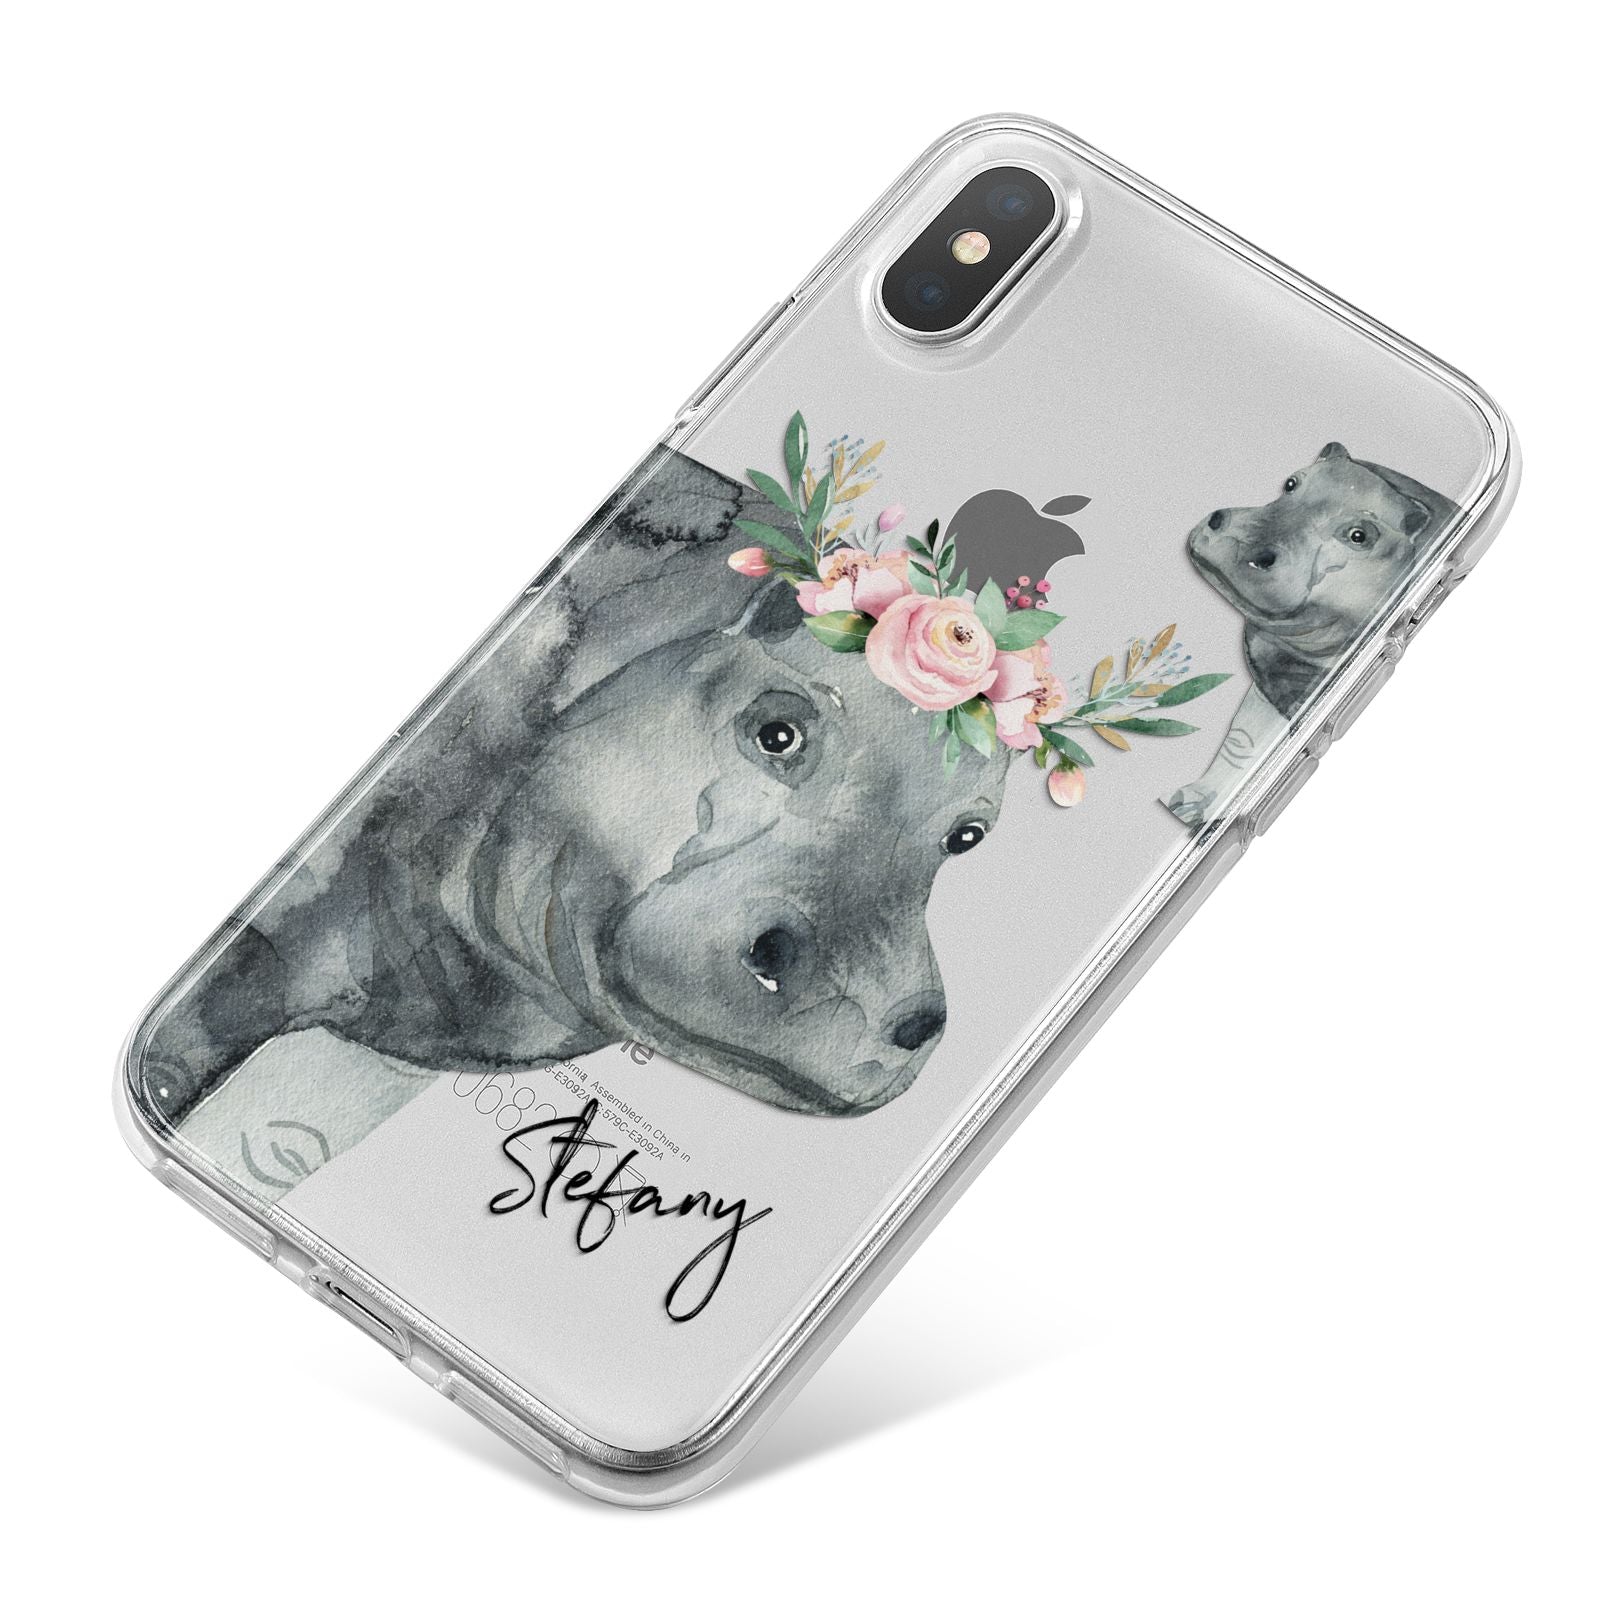 Personalised Hippopotamus iPhone X Bumper Case on Silver iPhone